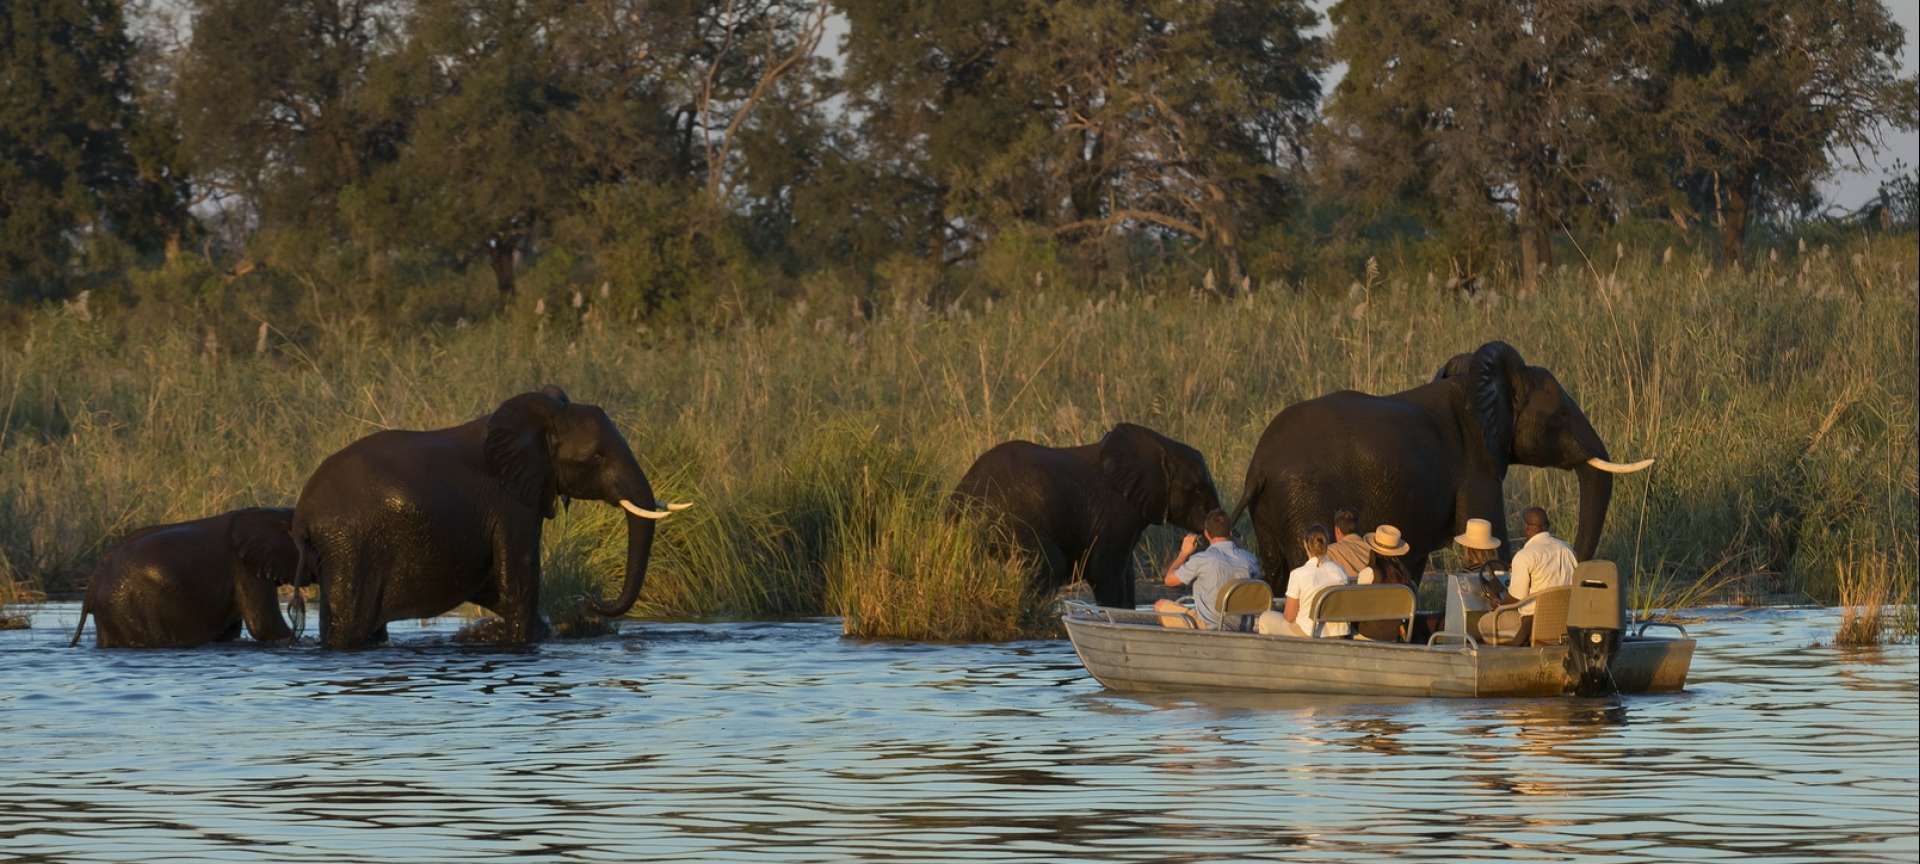 Elephant wading in the Zambezi River